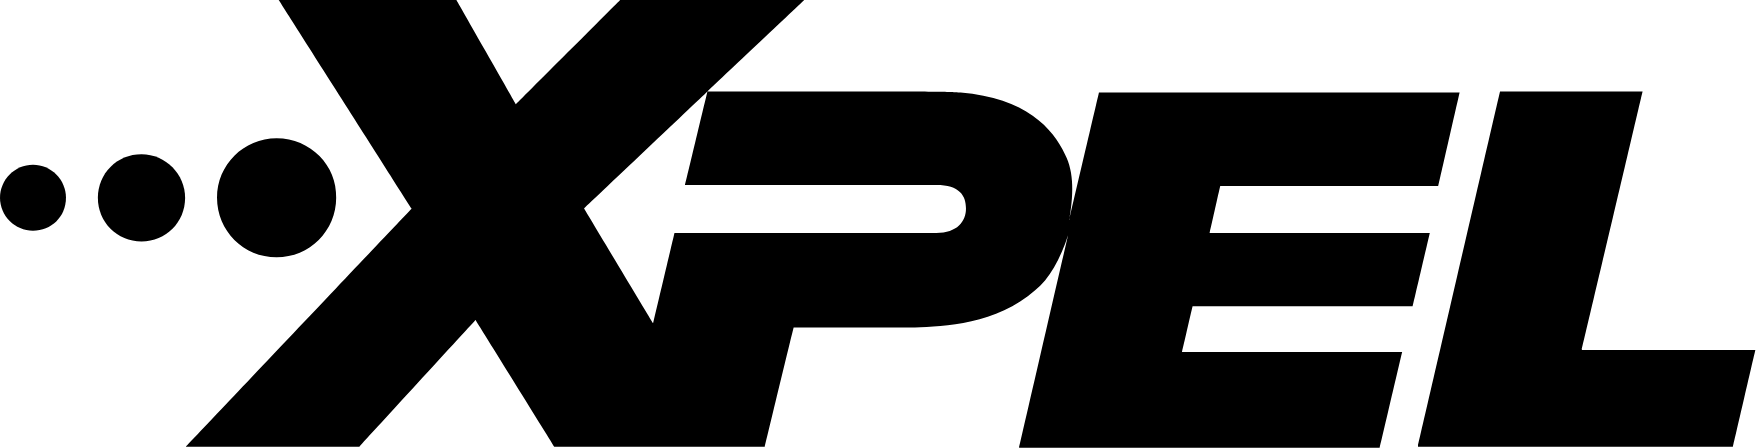 XPEL logo large (transparent PNG)